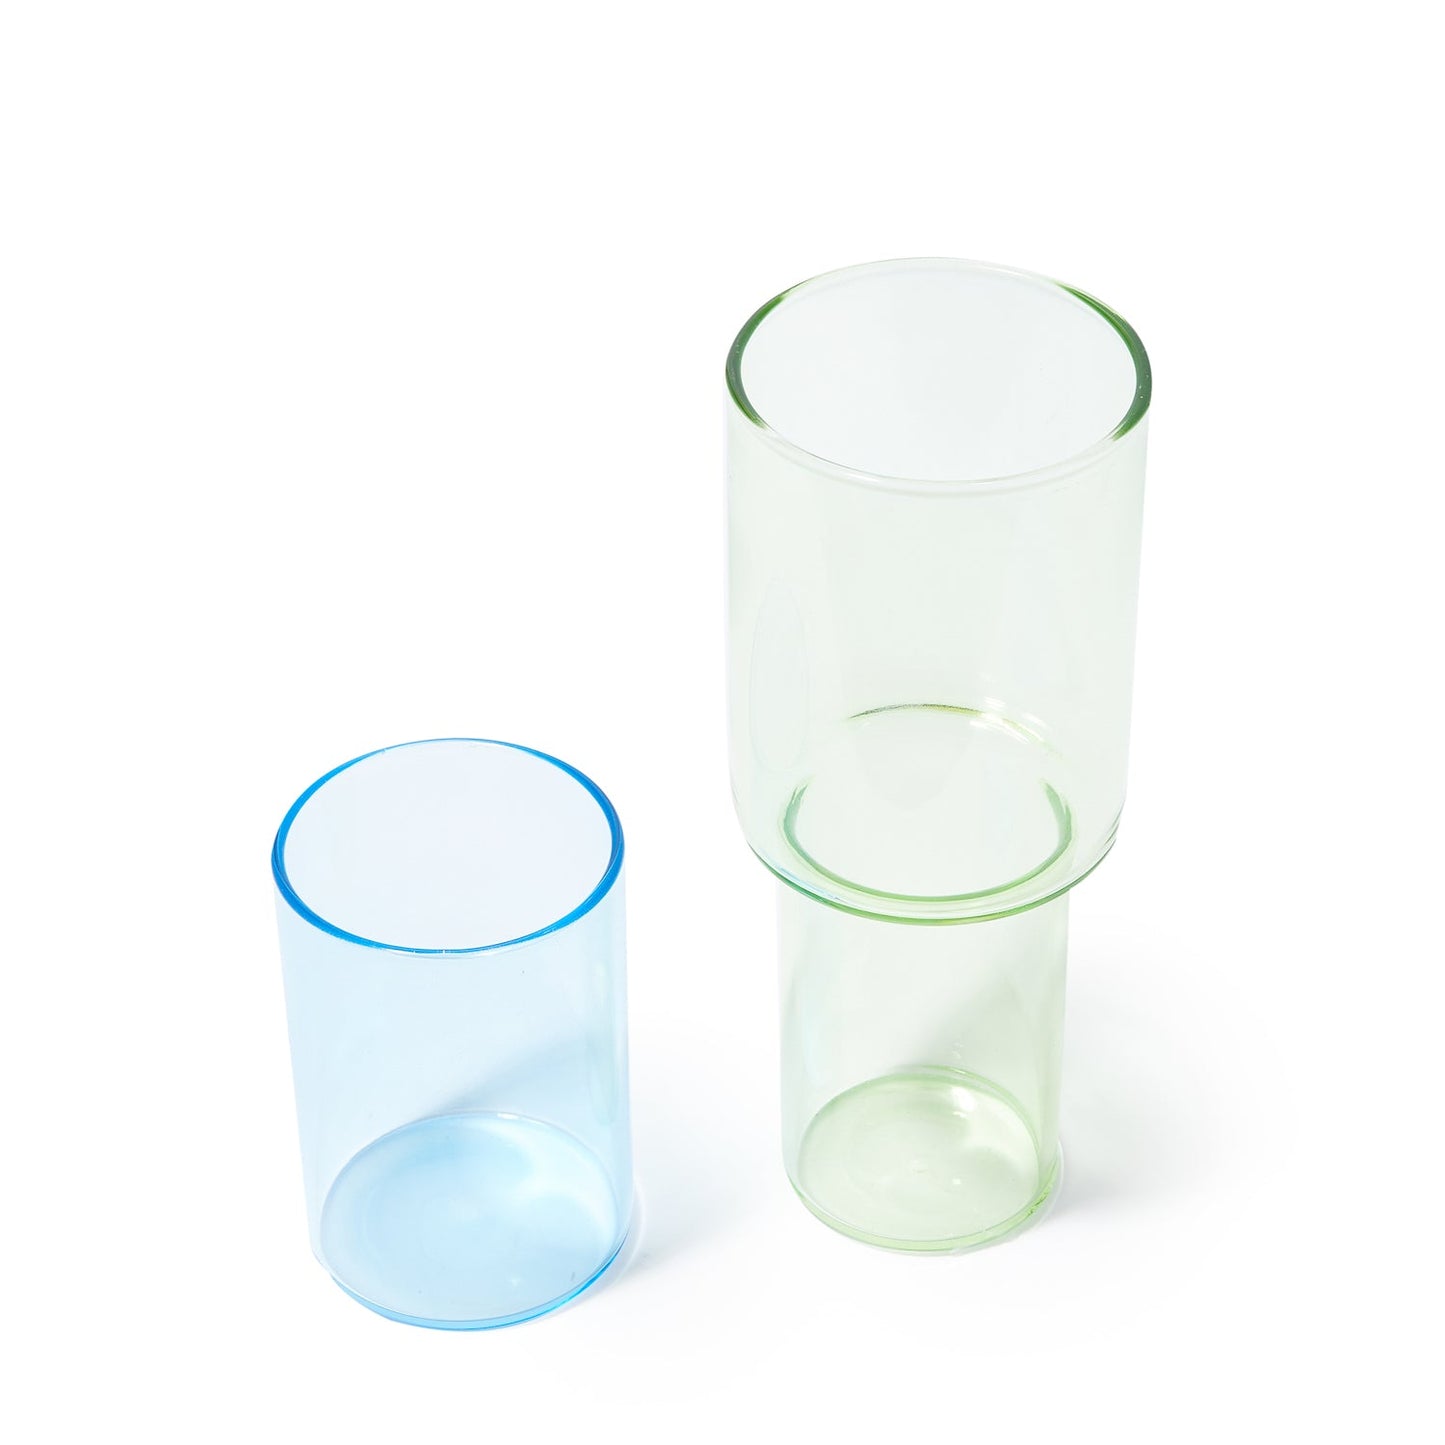 STACKING GLASS VASE | GREEN & BLUE